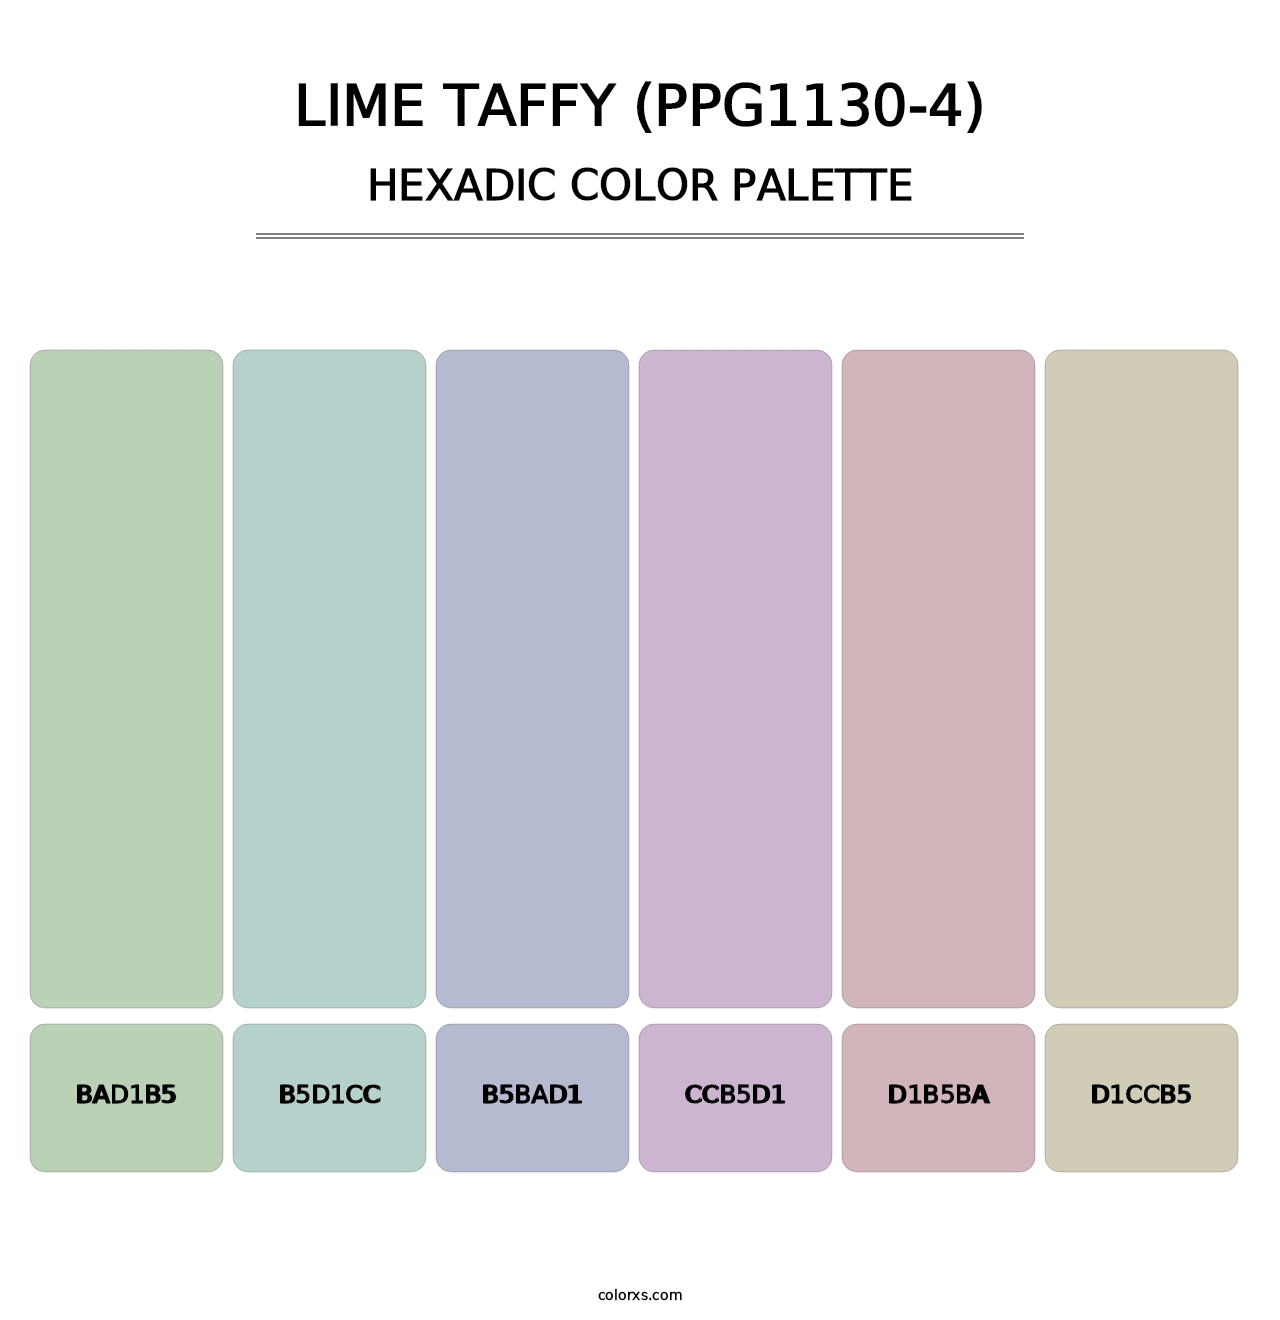 Lime Taffy (PPG1130-4) - Hexadic Color Palette